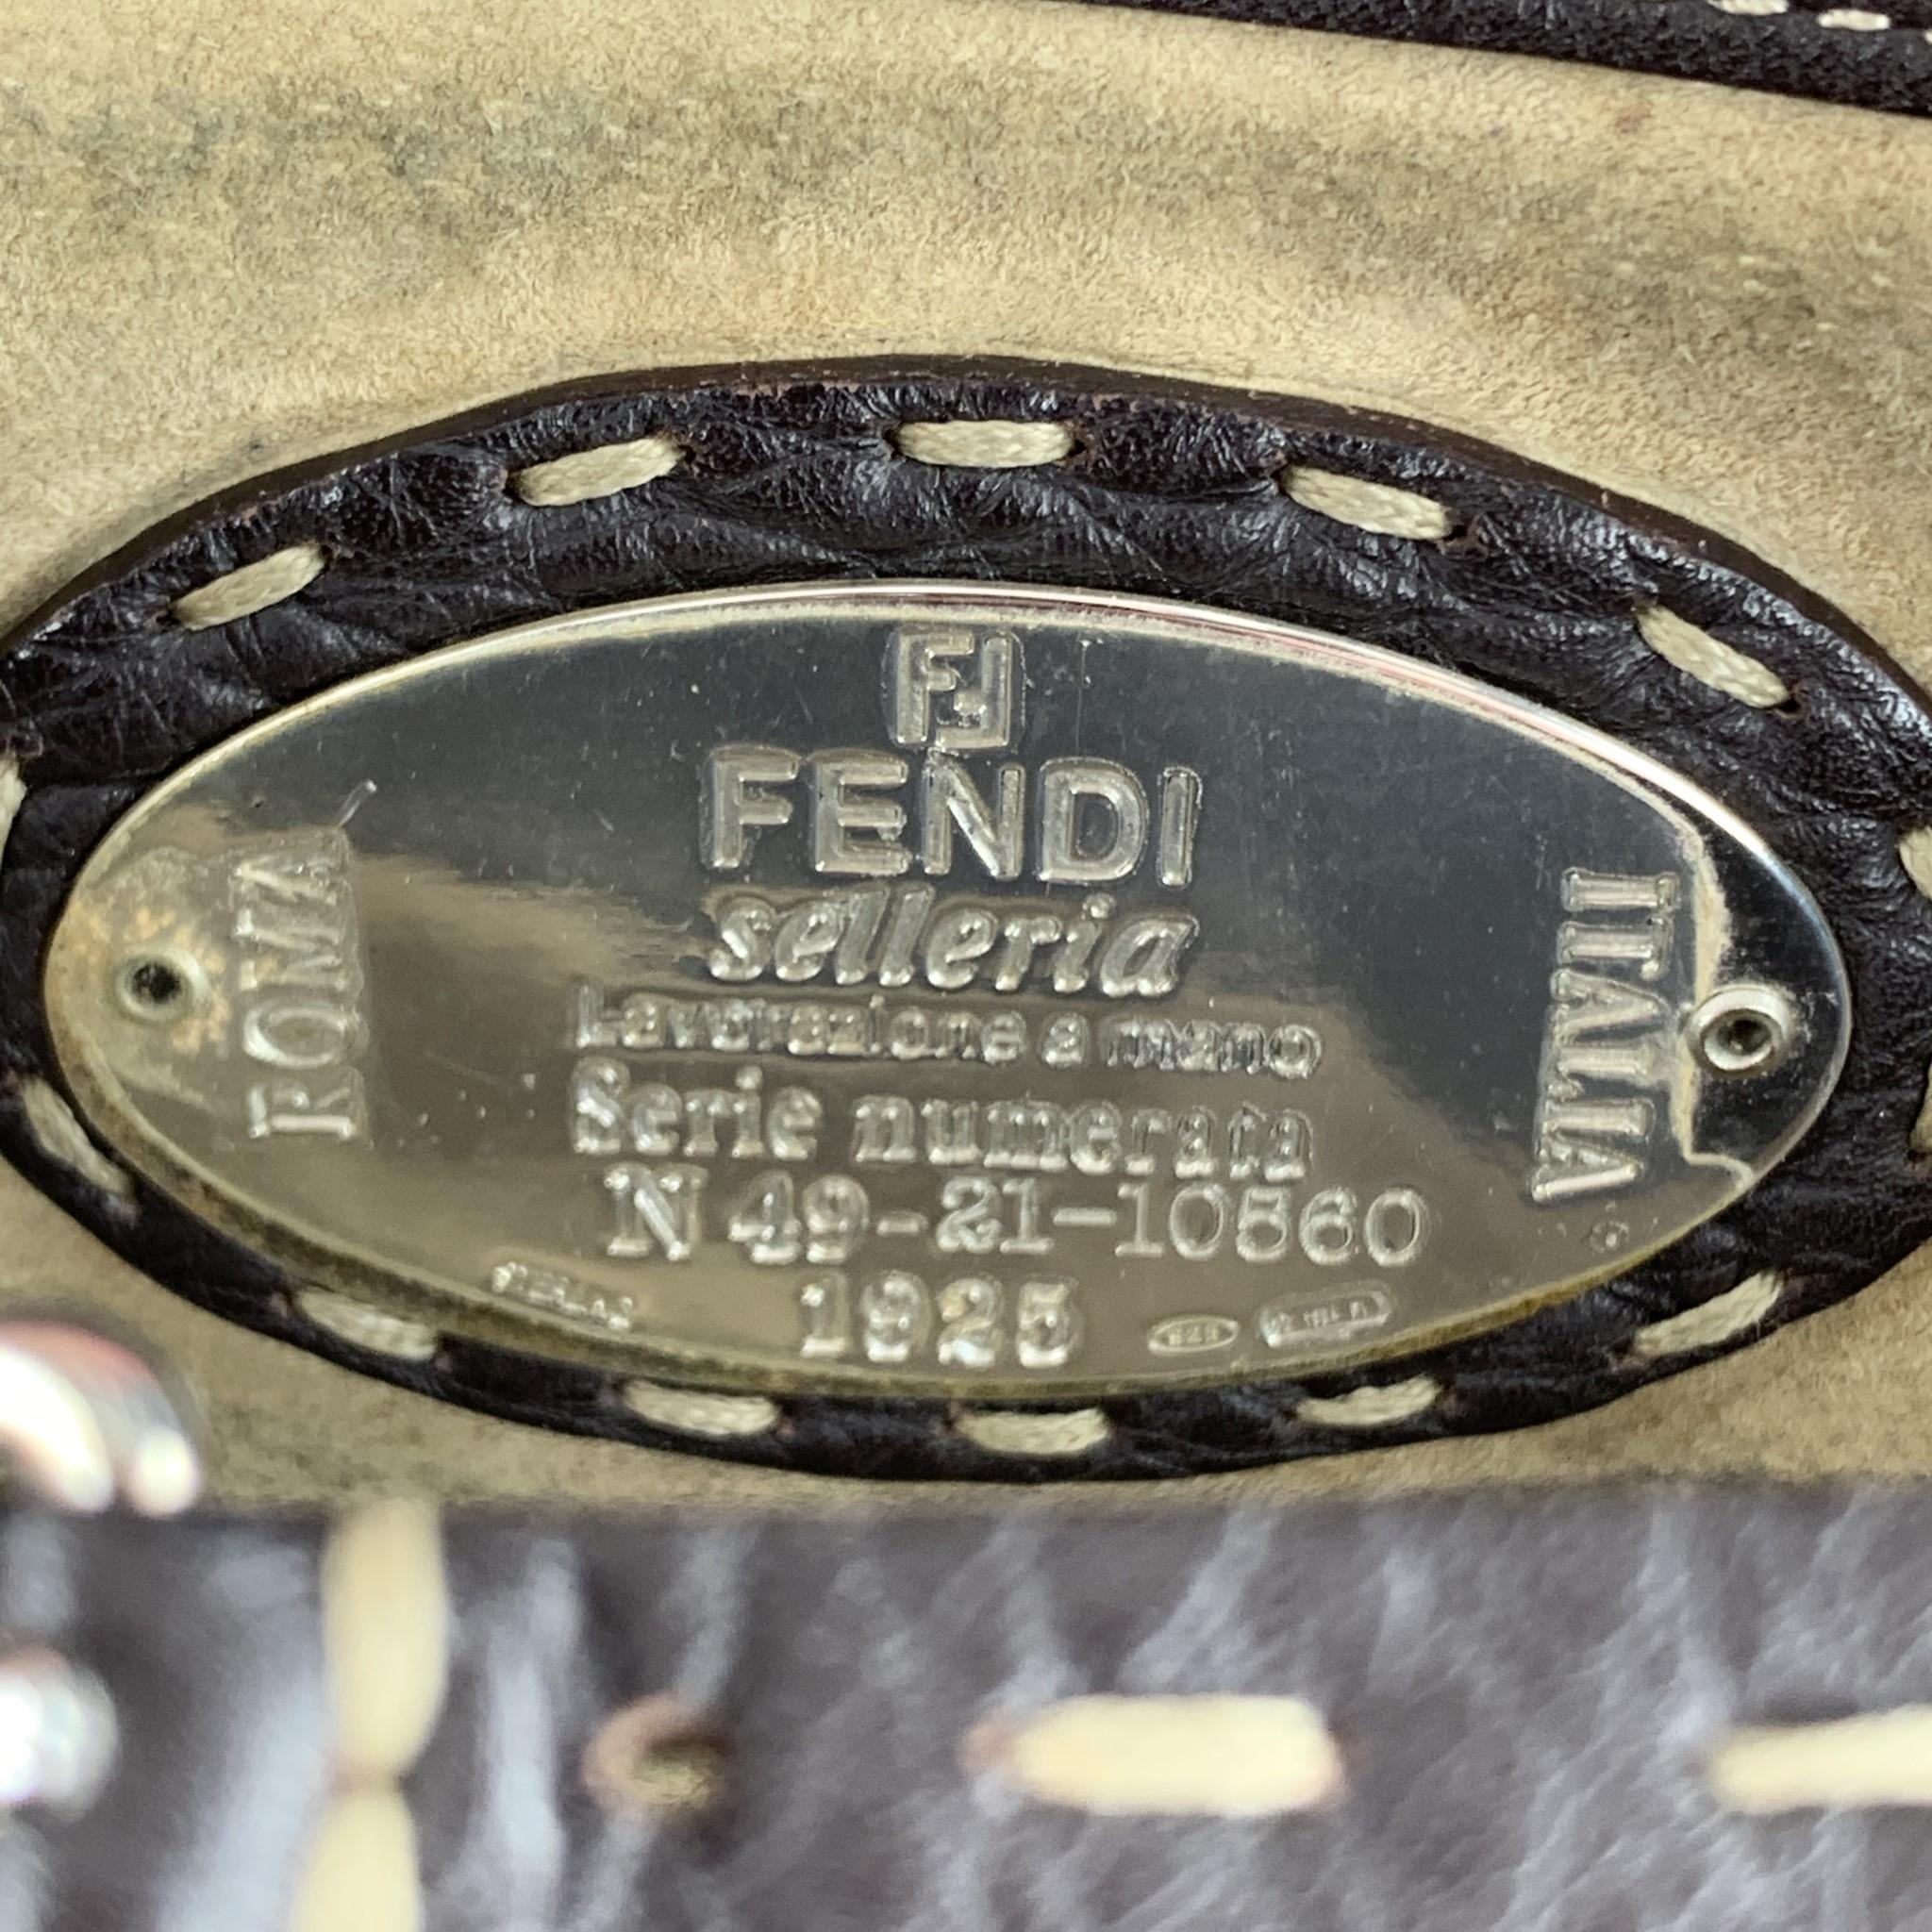 FENDI Selleria Brown leather Contrast Stitch Borsa Linda Grande Handbag 1